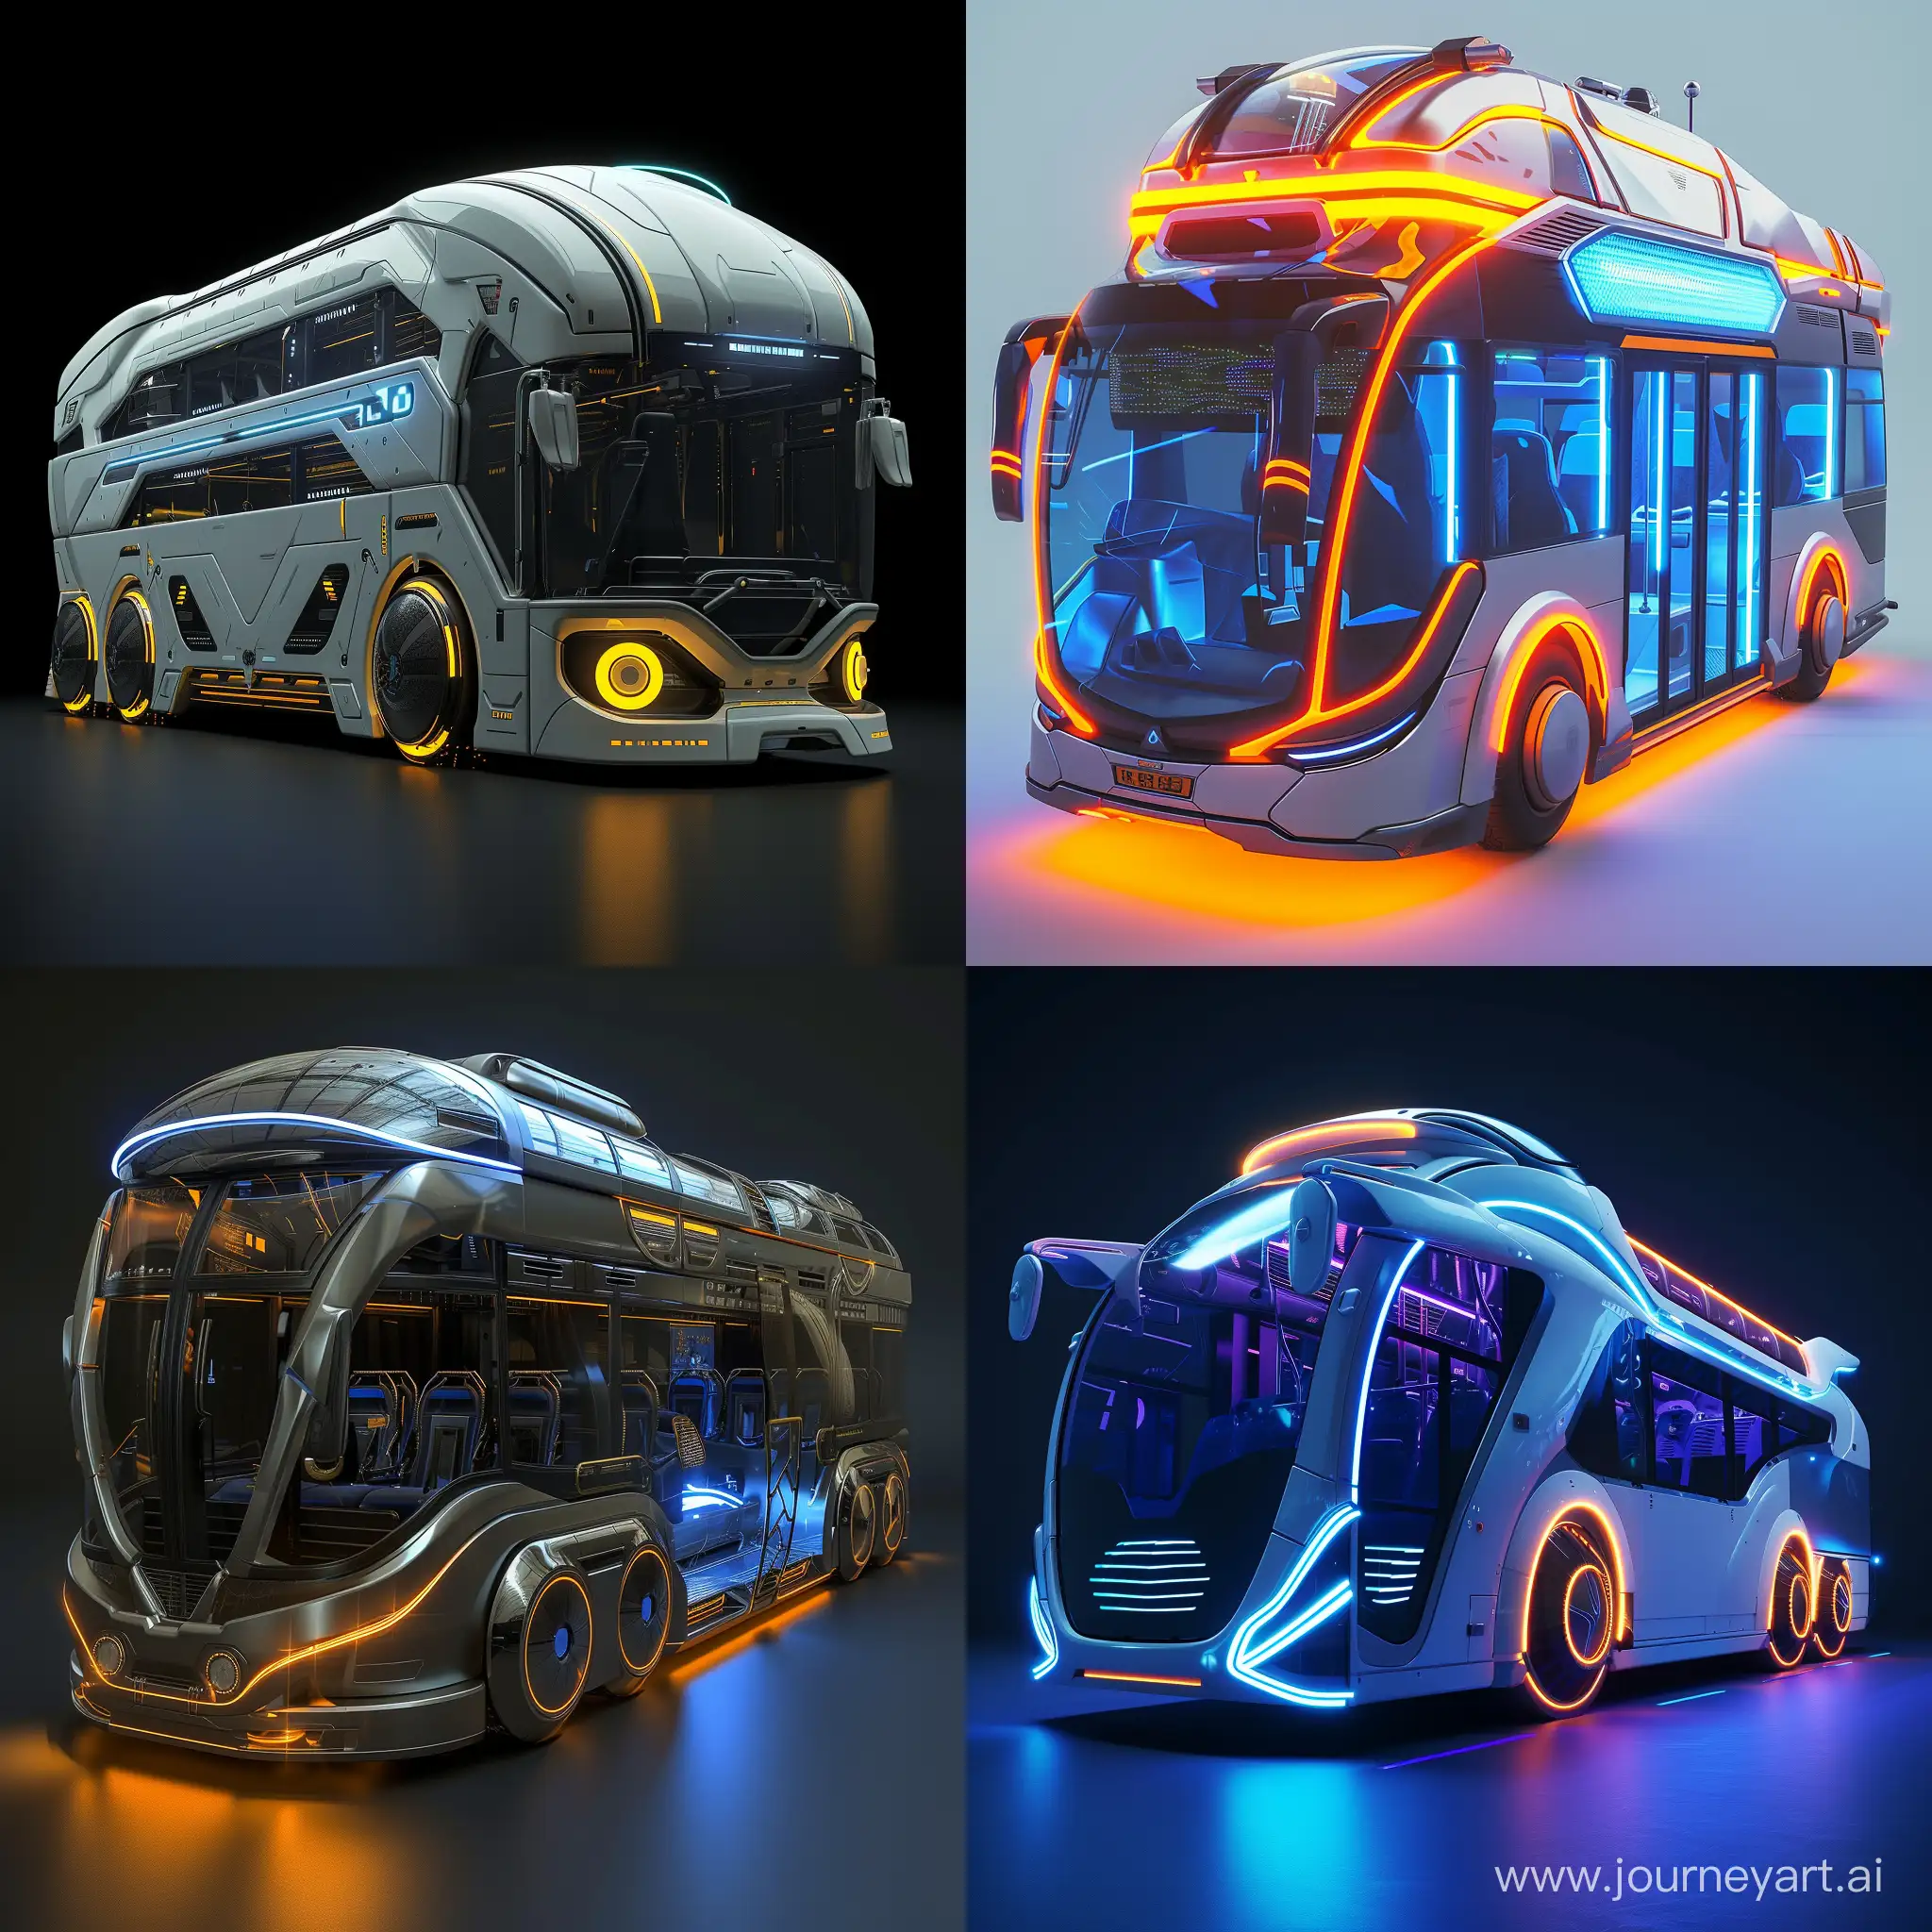 Futuristic-SciFi-Style-Bus-Travelling-Through-Urban-Landscape